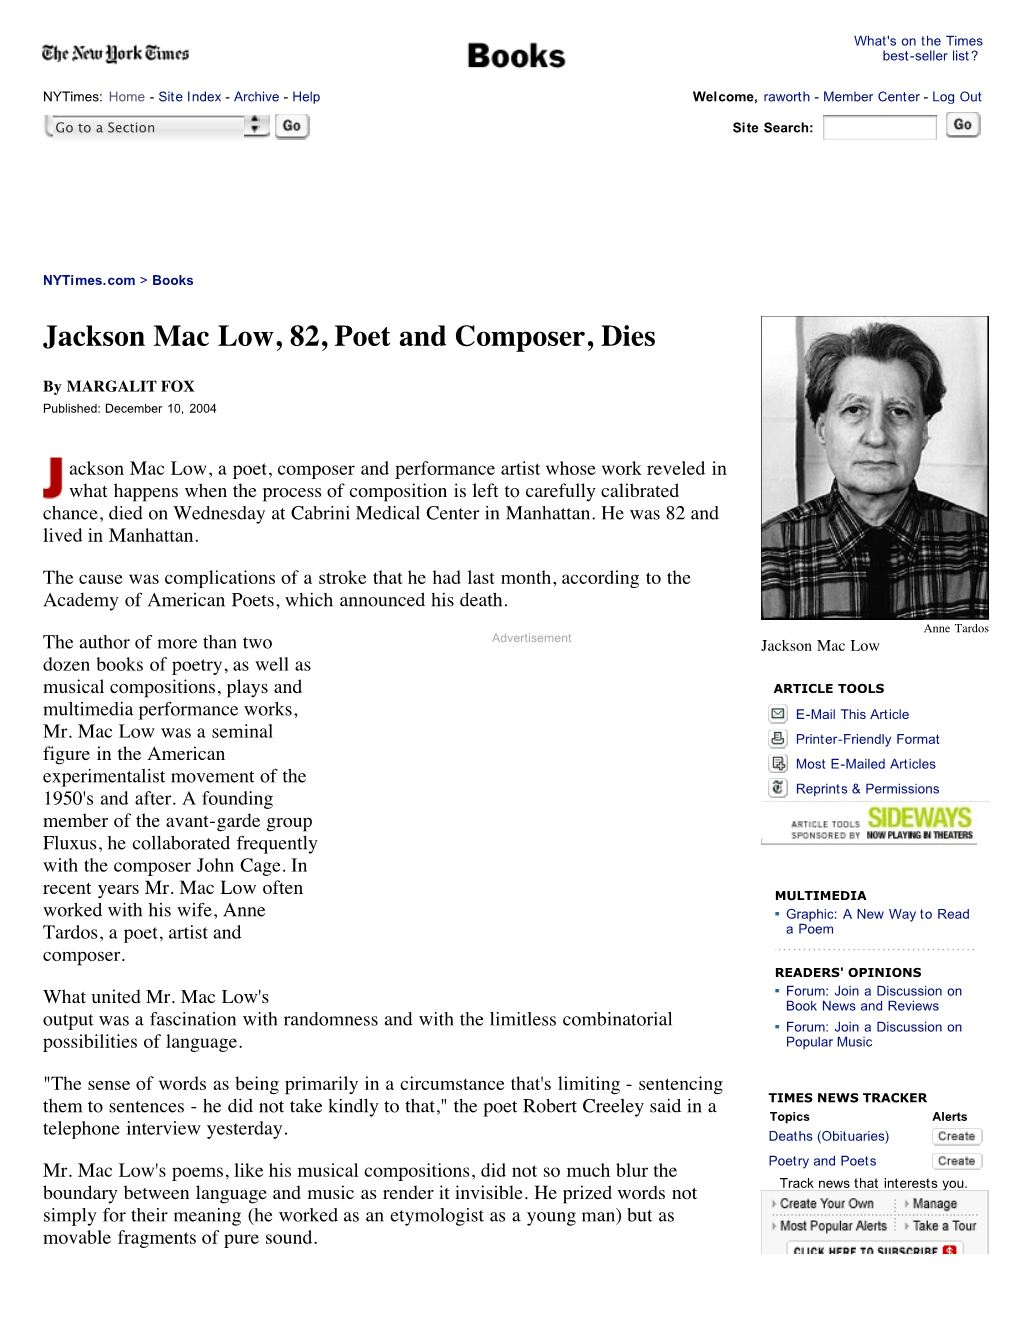 Jackson Mac Low, 82, Poet and Composer, Dies